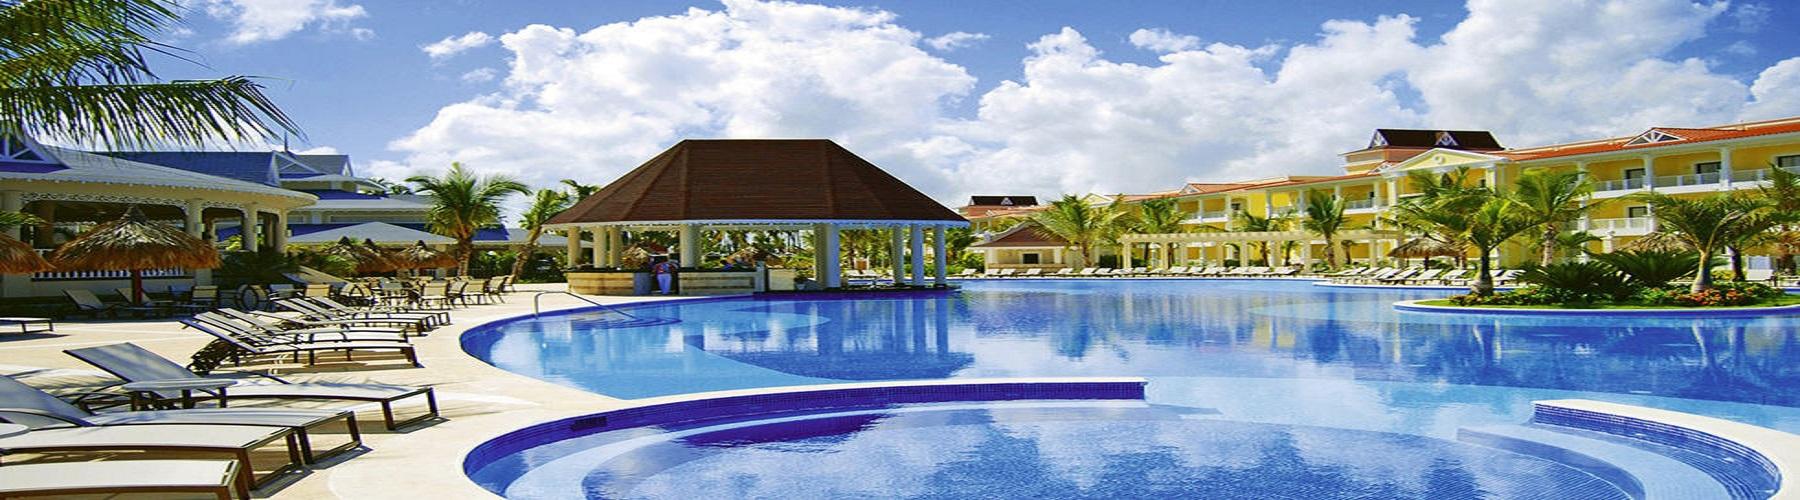 Курорт в Доминикане Luxury Bahia Principe Esmeralda 5*